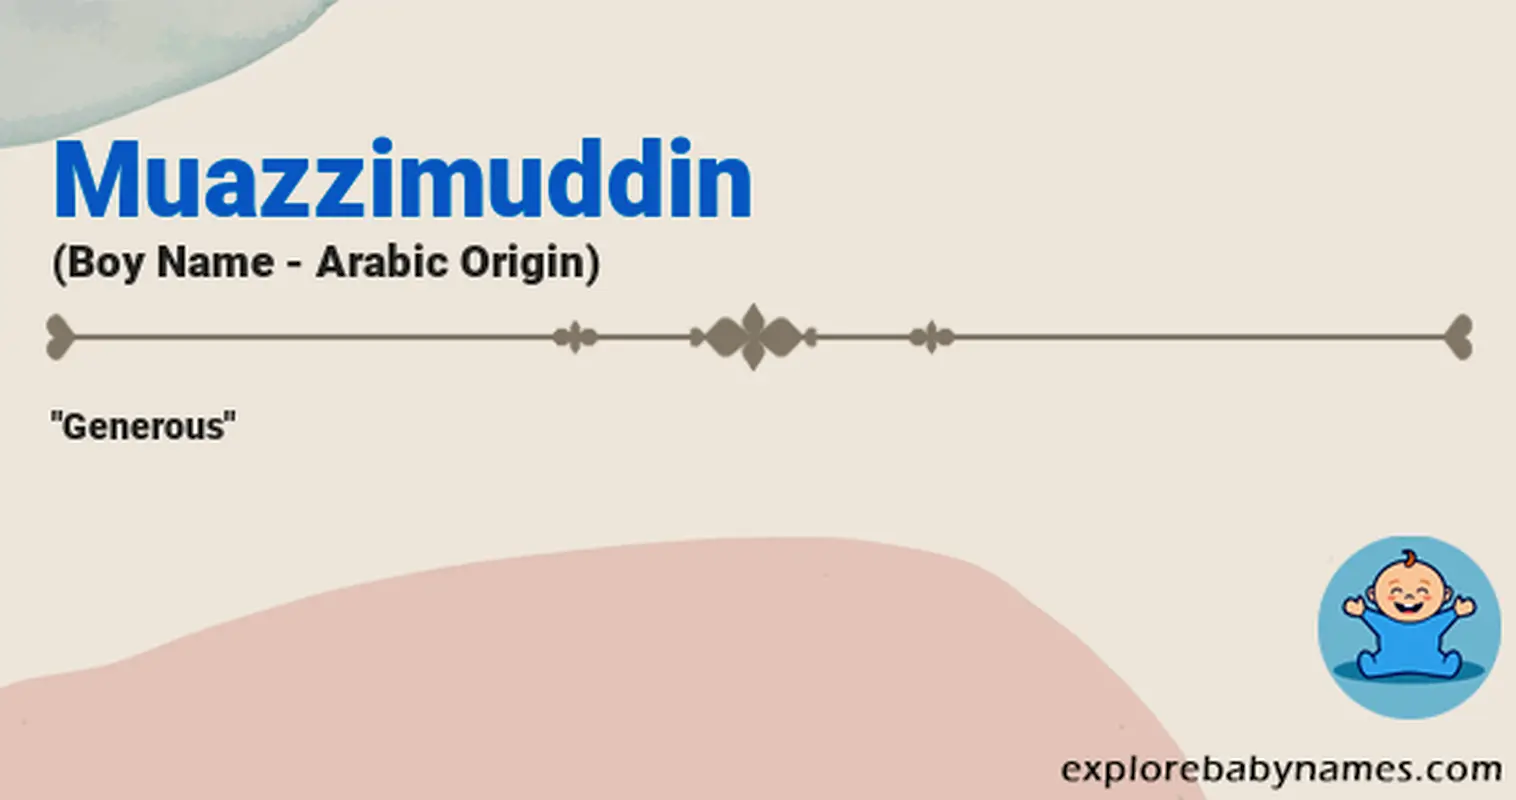 Meaning of Muazzimuddin